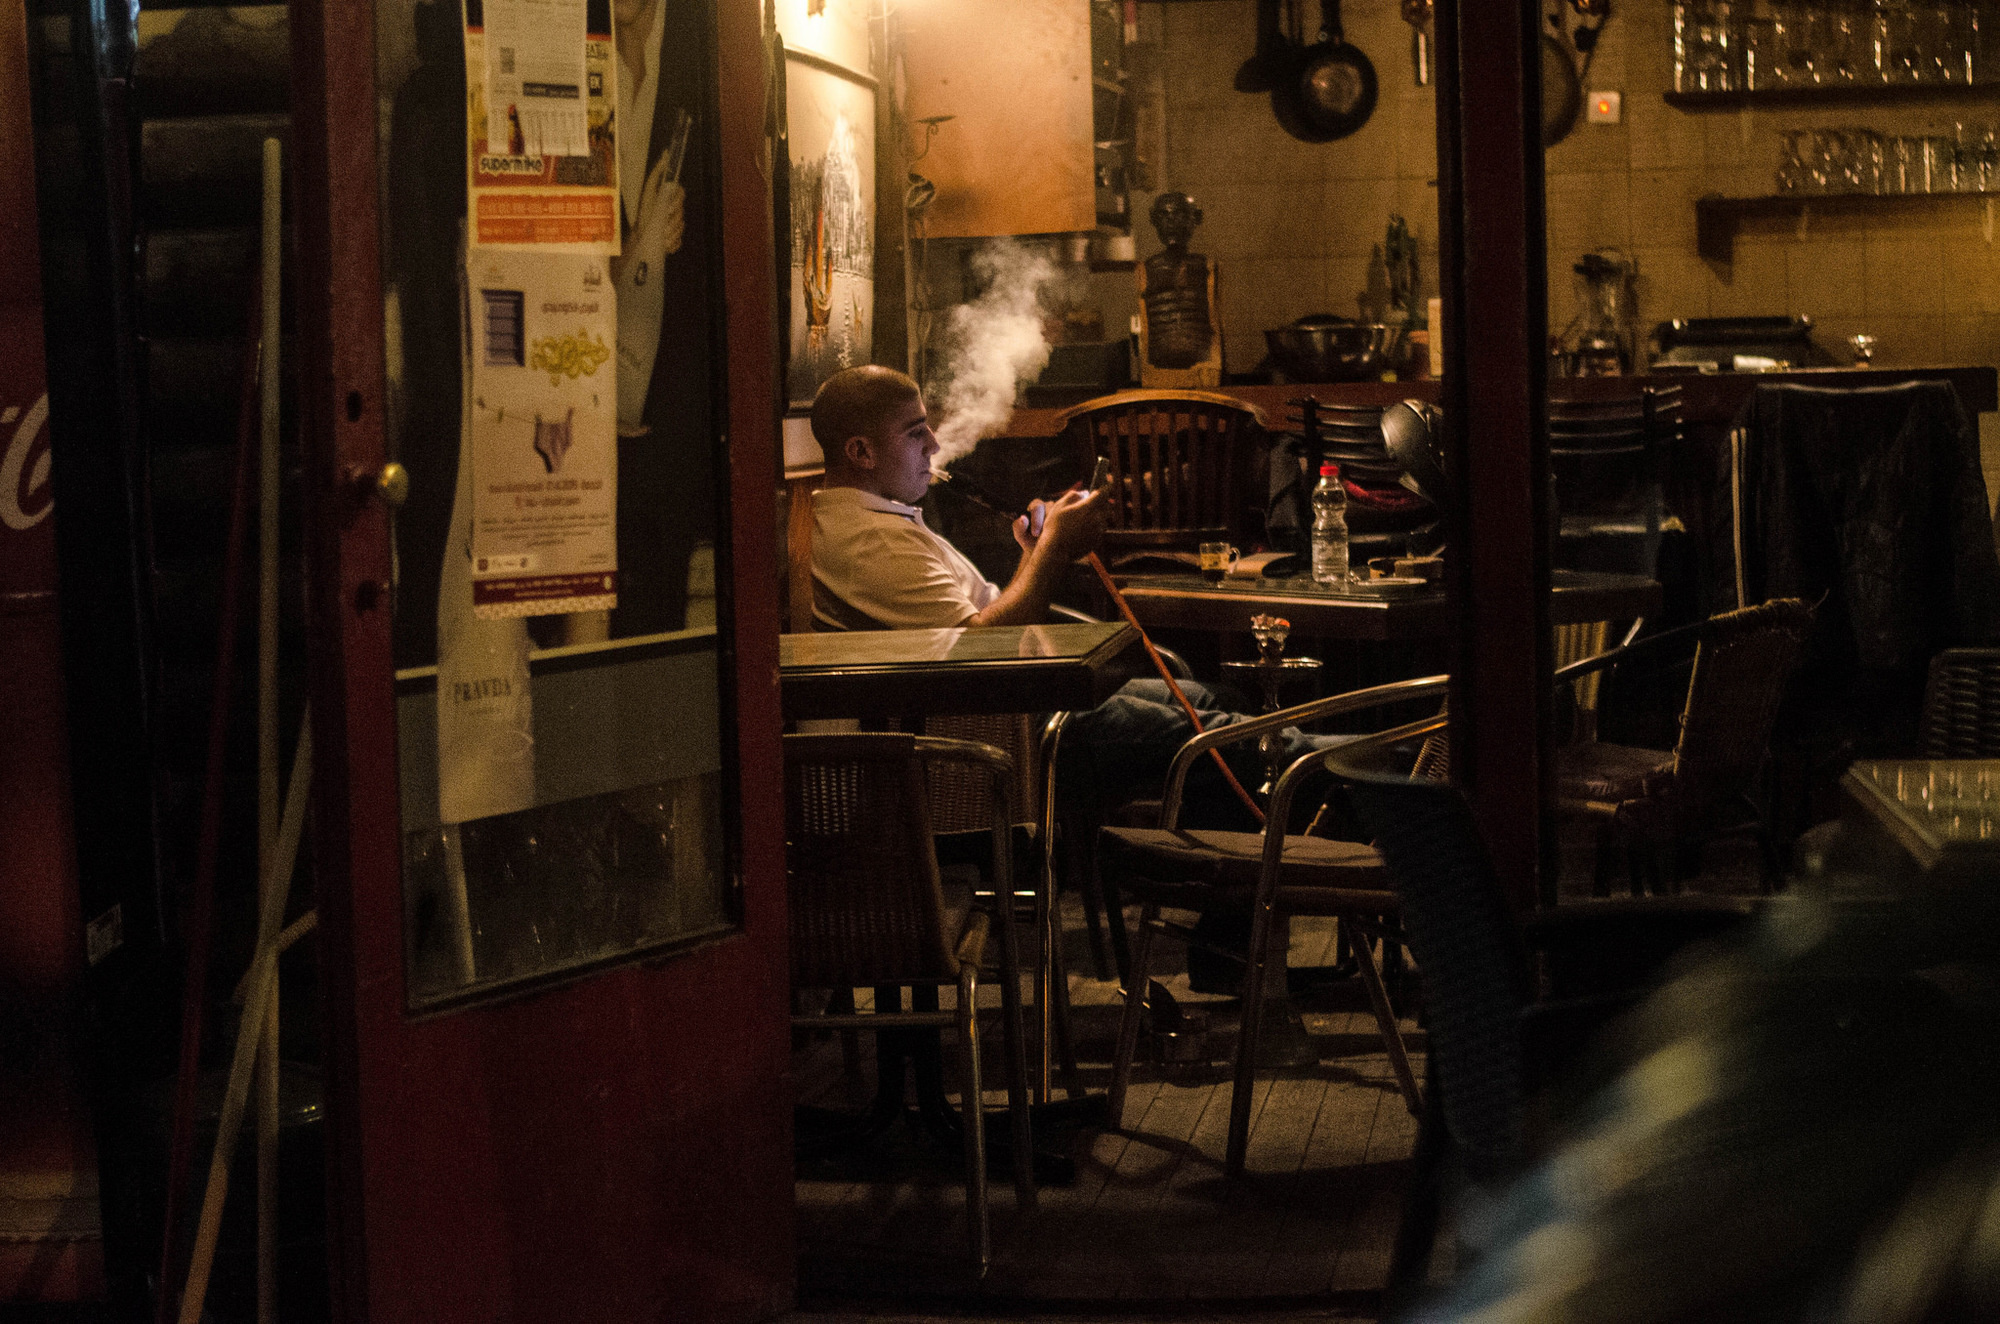 Smoking inside restaurants and bars.